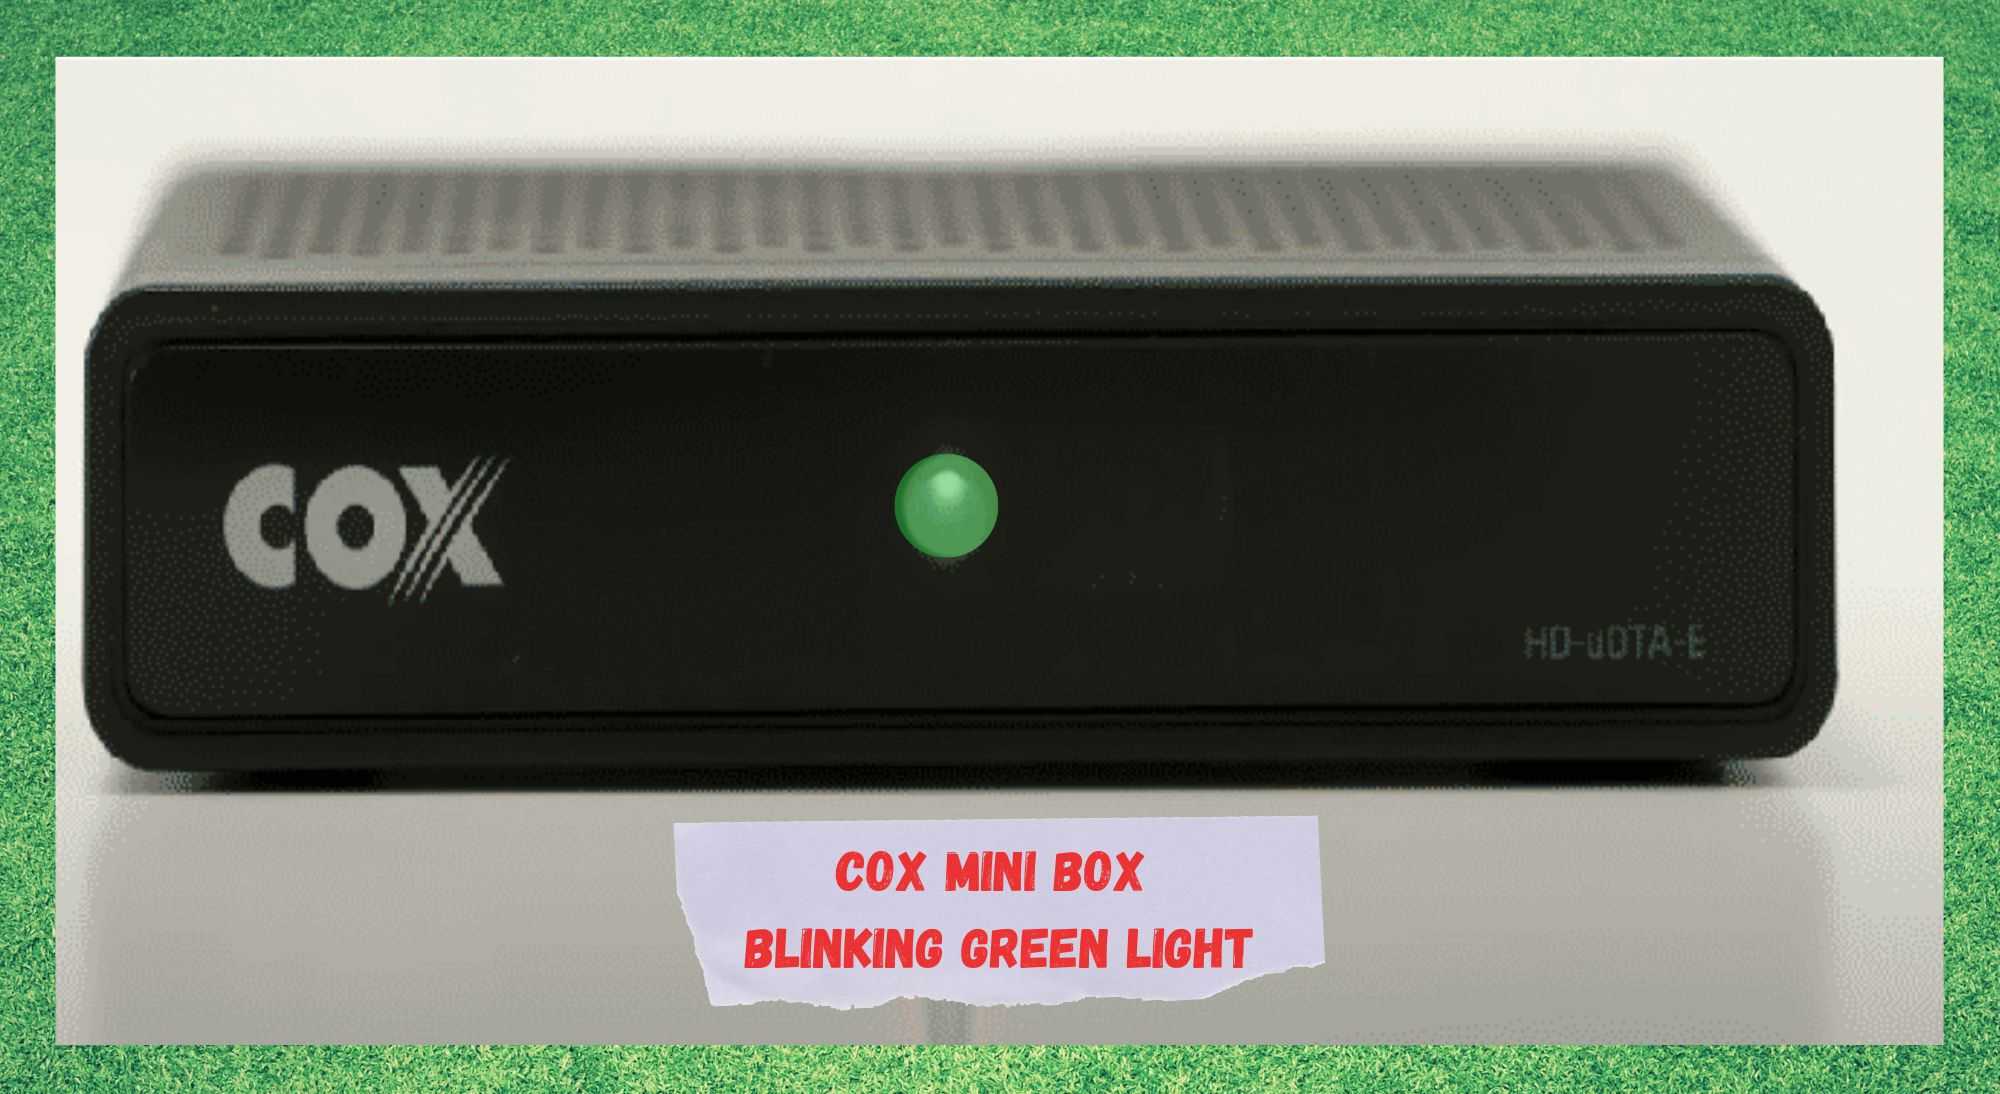 cox mini box blinking green light